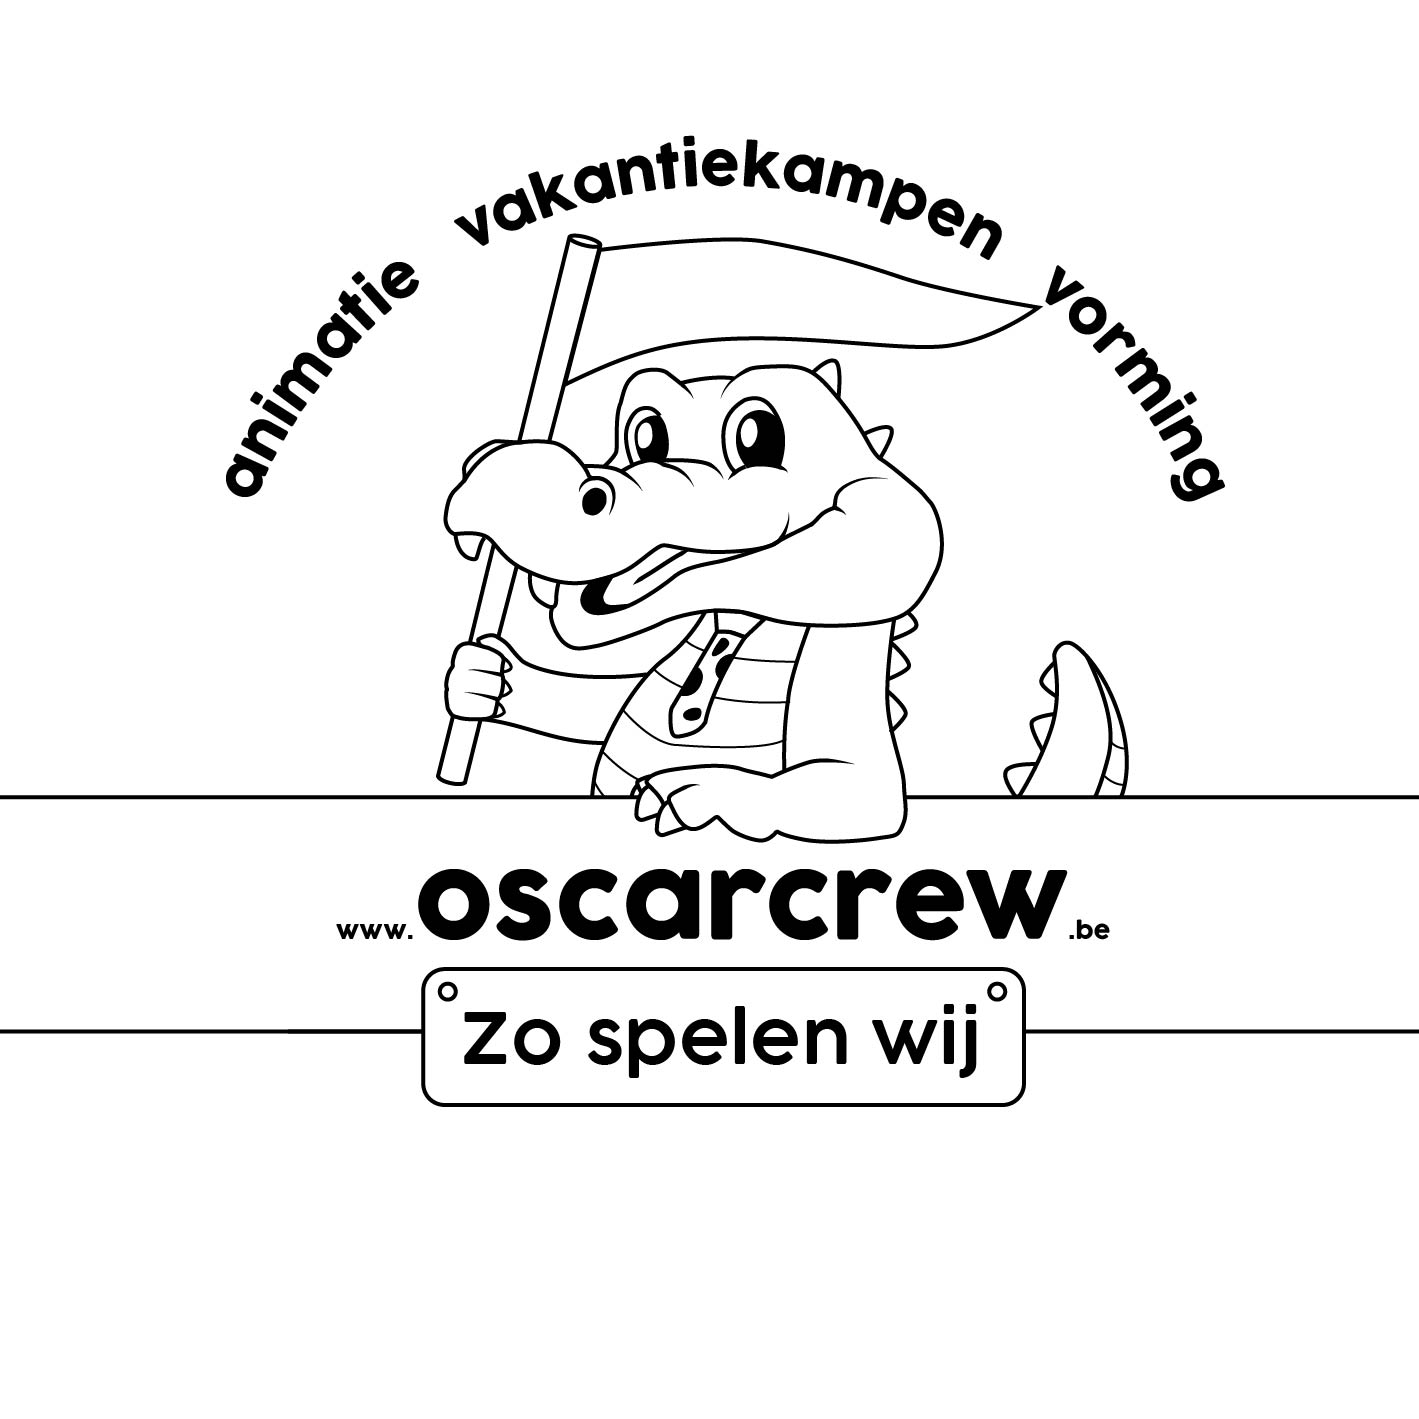 Oscarcrew